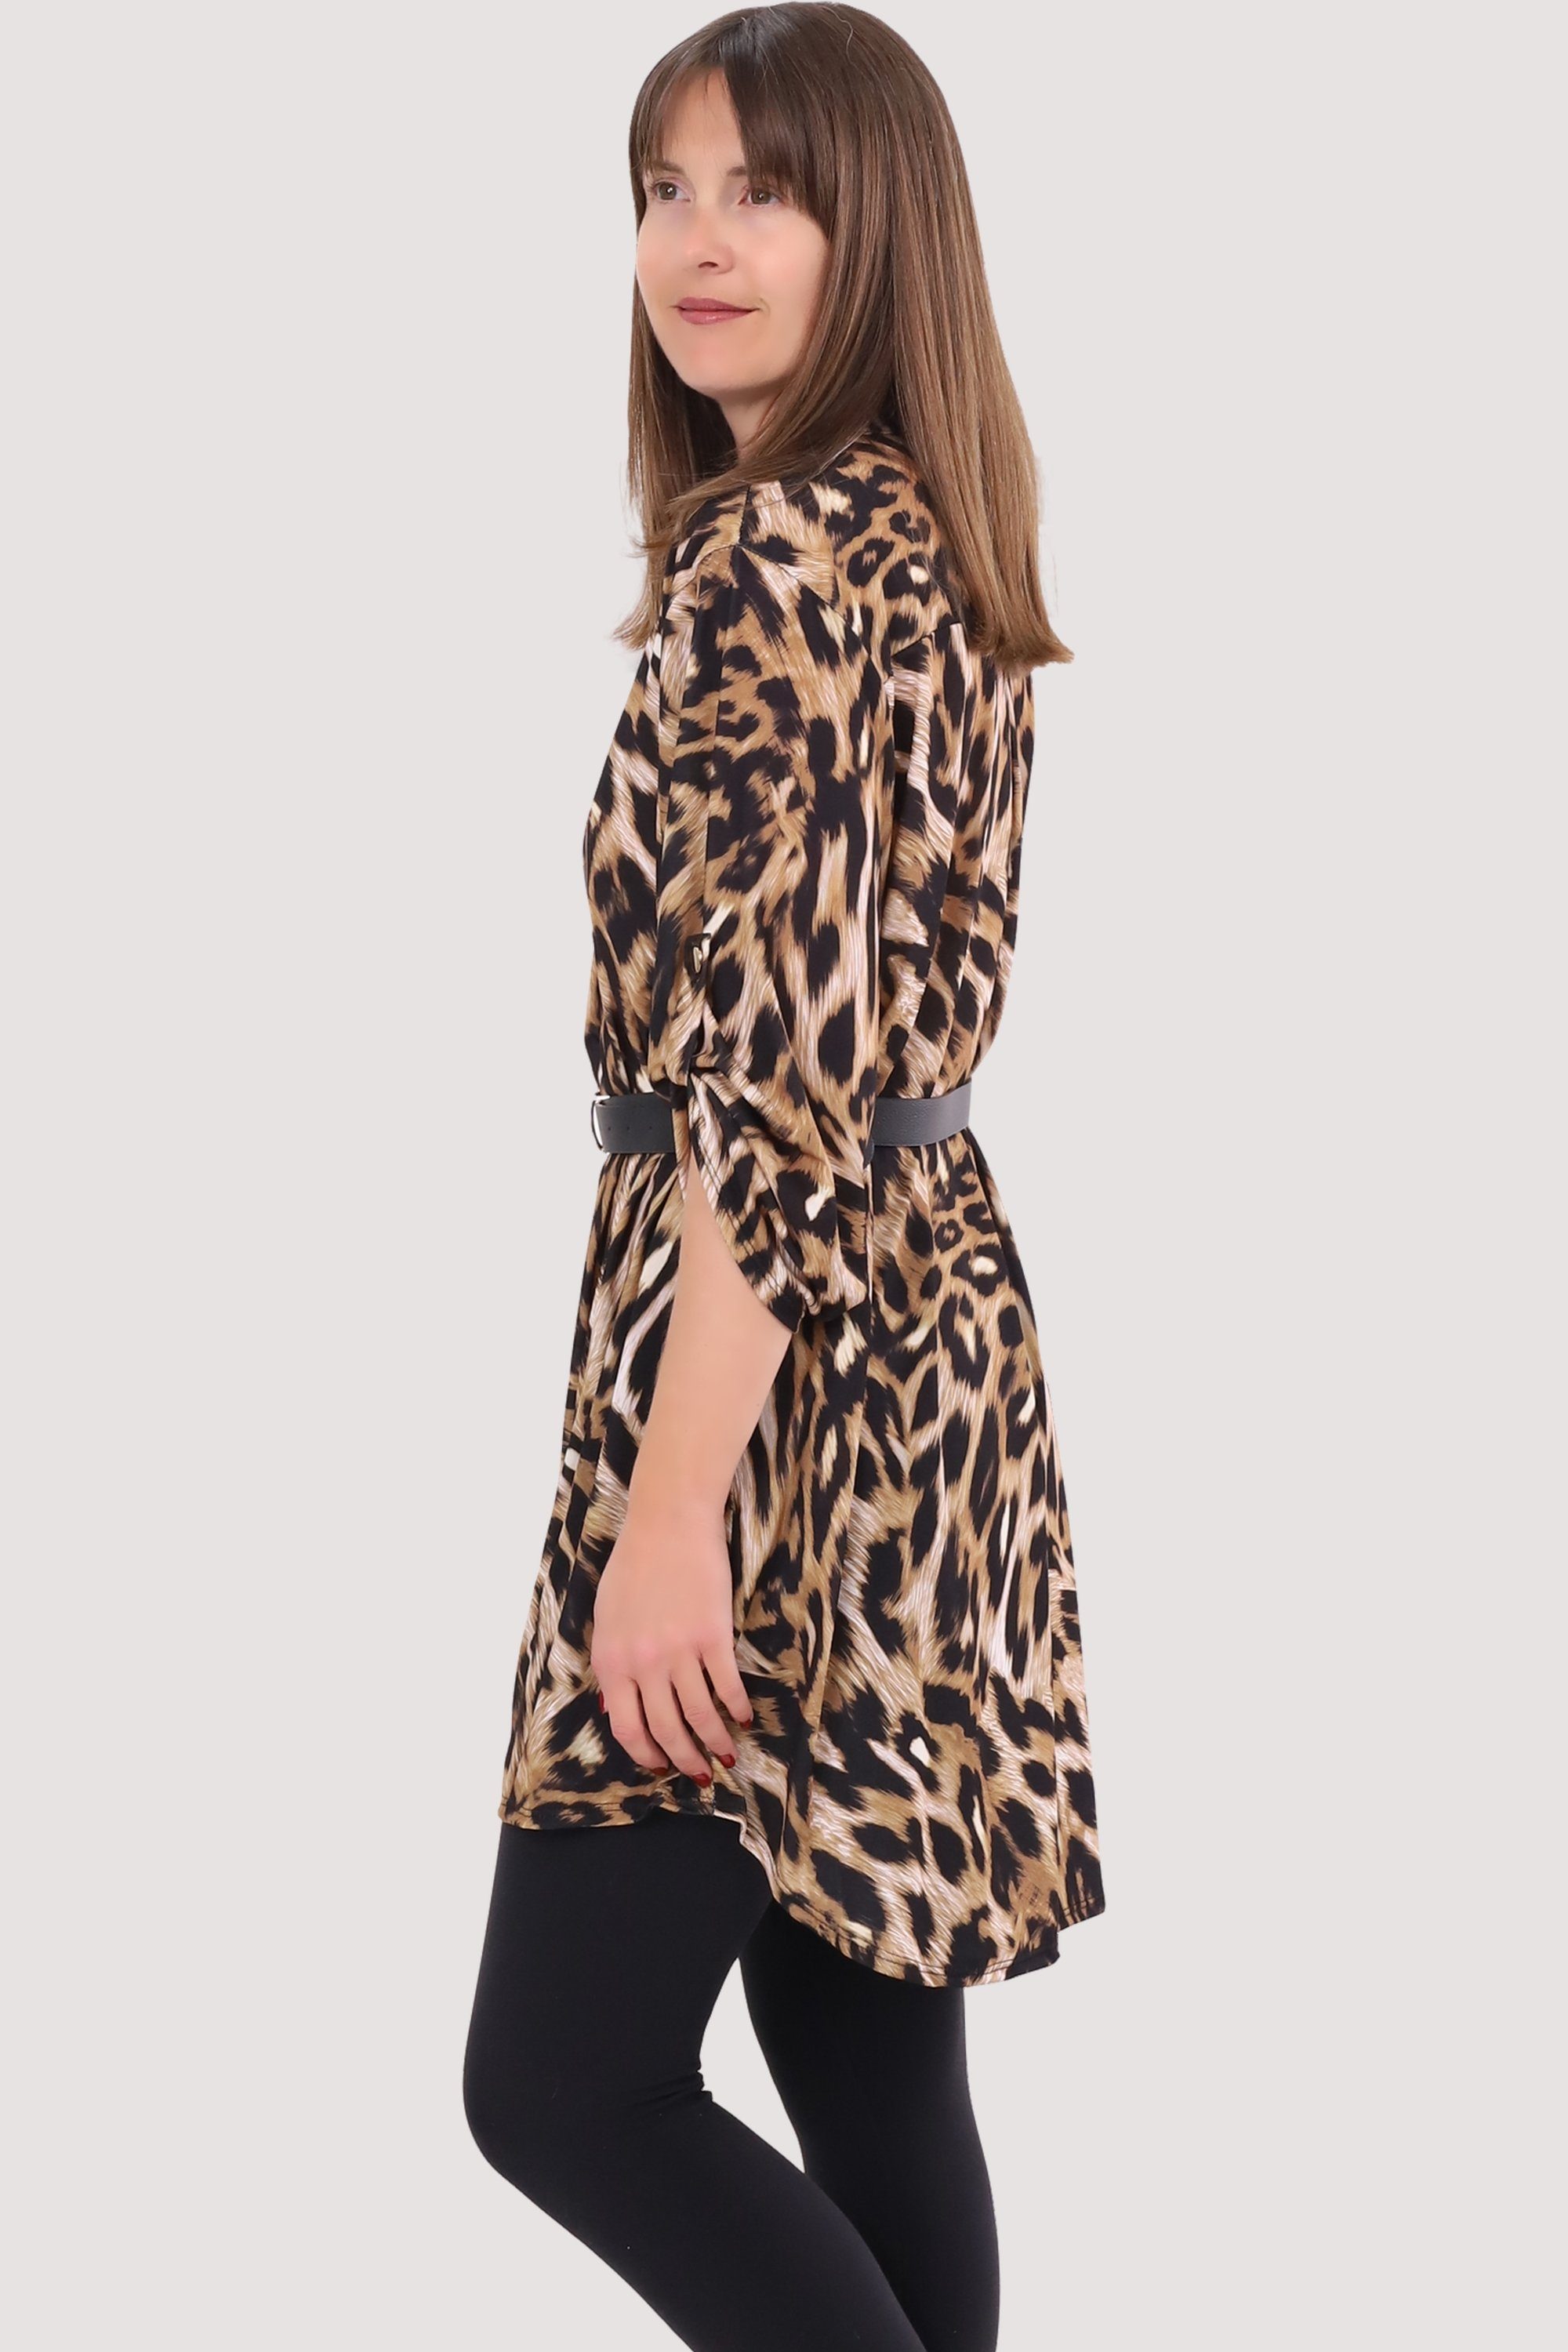 Druckkleid Animalprint 23203 than Gürtel Einheitsgröße 3 Kleid malito more fashion Bluse Gepard Tunika mit